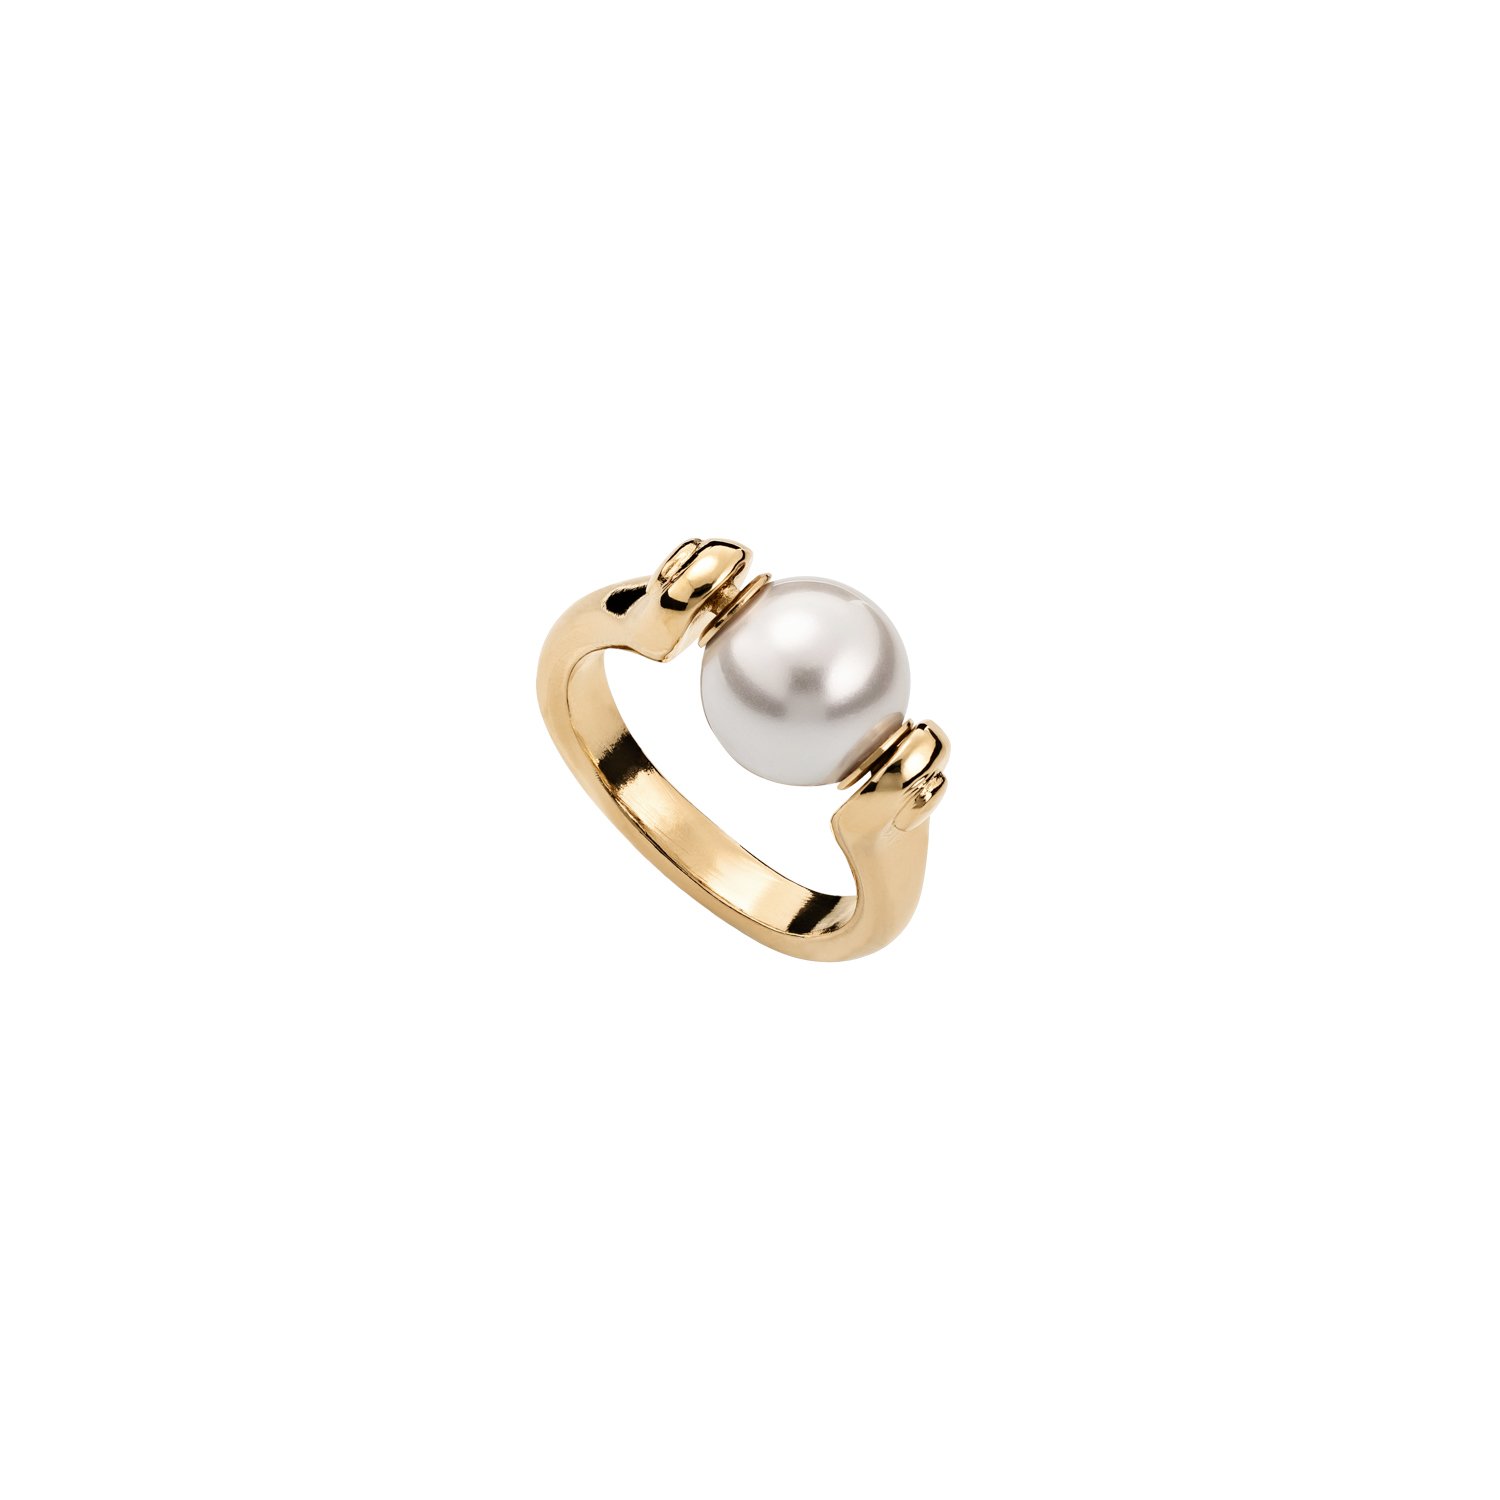 Pearl Moon Ring £120